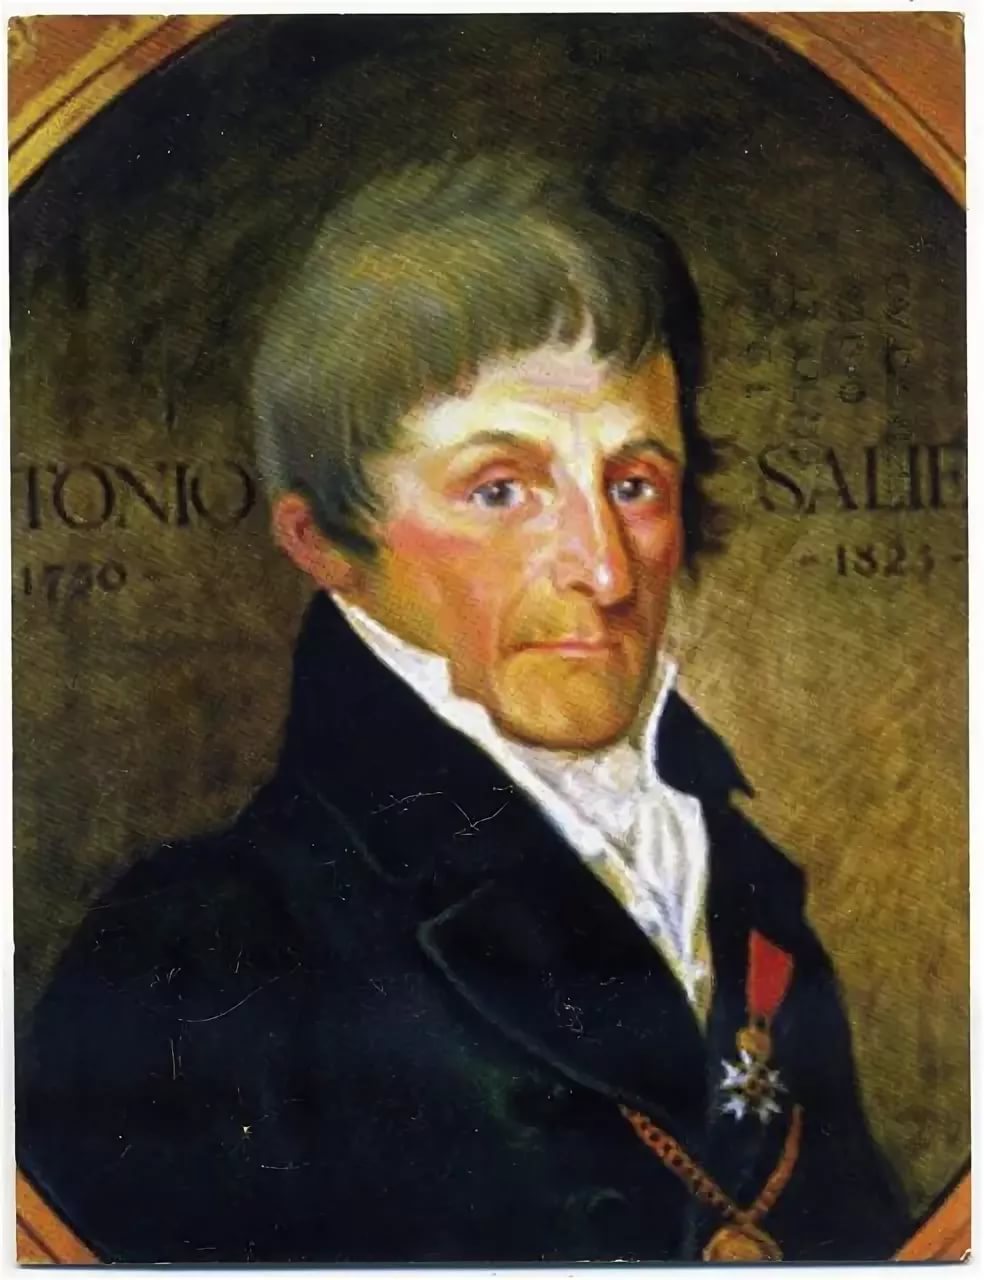 Сальери (Salieri) Антонио (1750-1825)